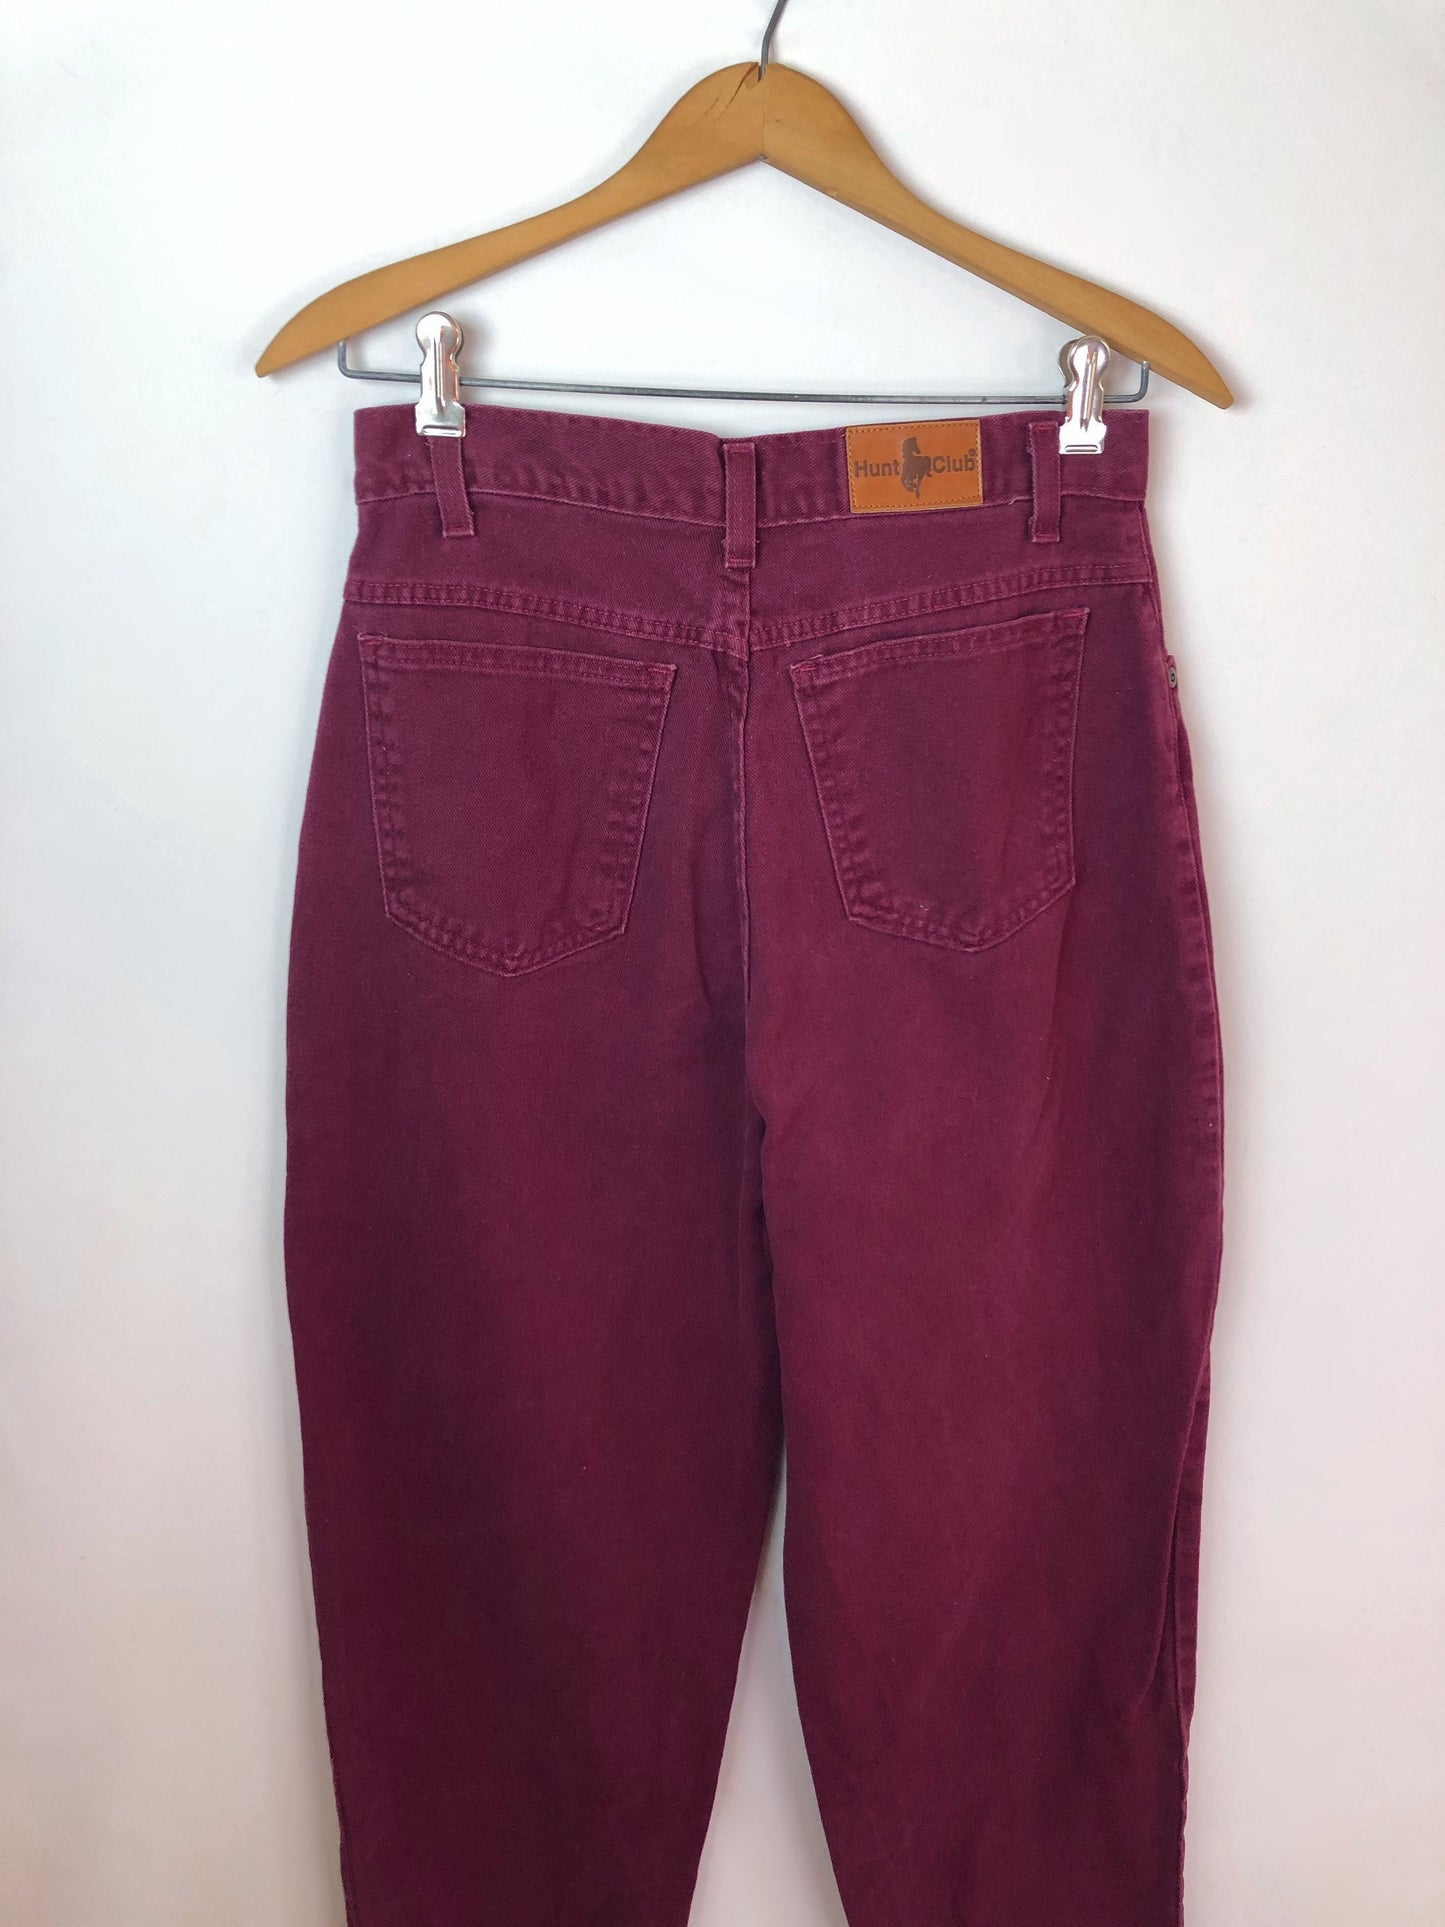 Wms Vintage 90’s Hunt Club Wine Bordeaux 5 Pocket Colored Denim High Waisted Jeans Size 4/6